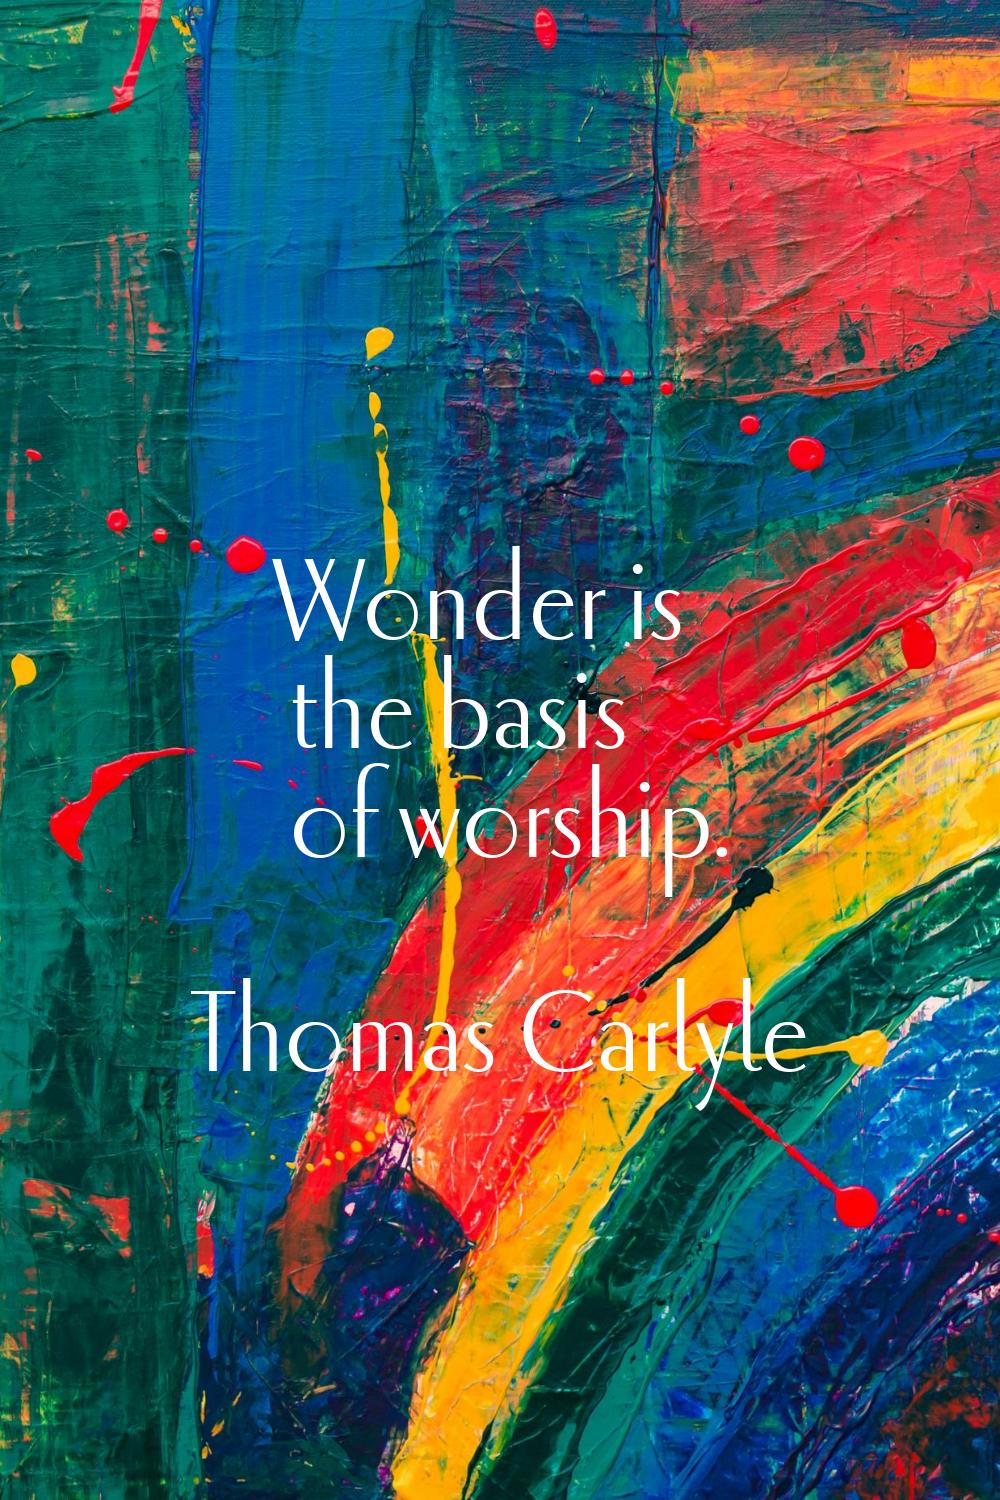 Wonder is the basis of worship.